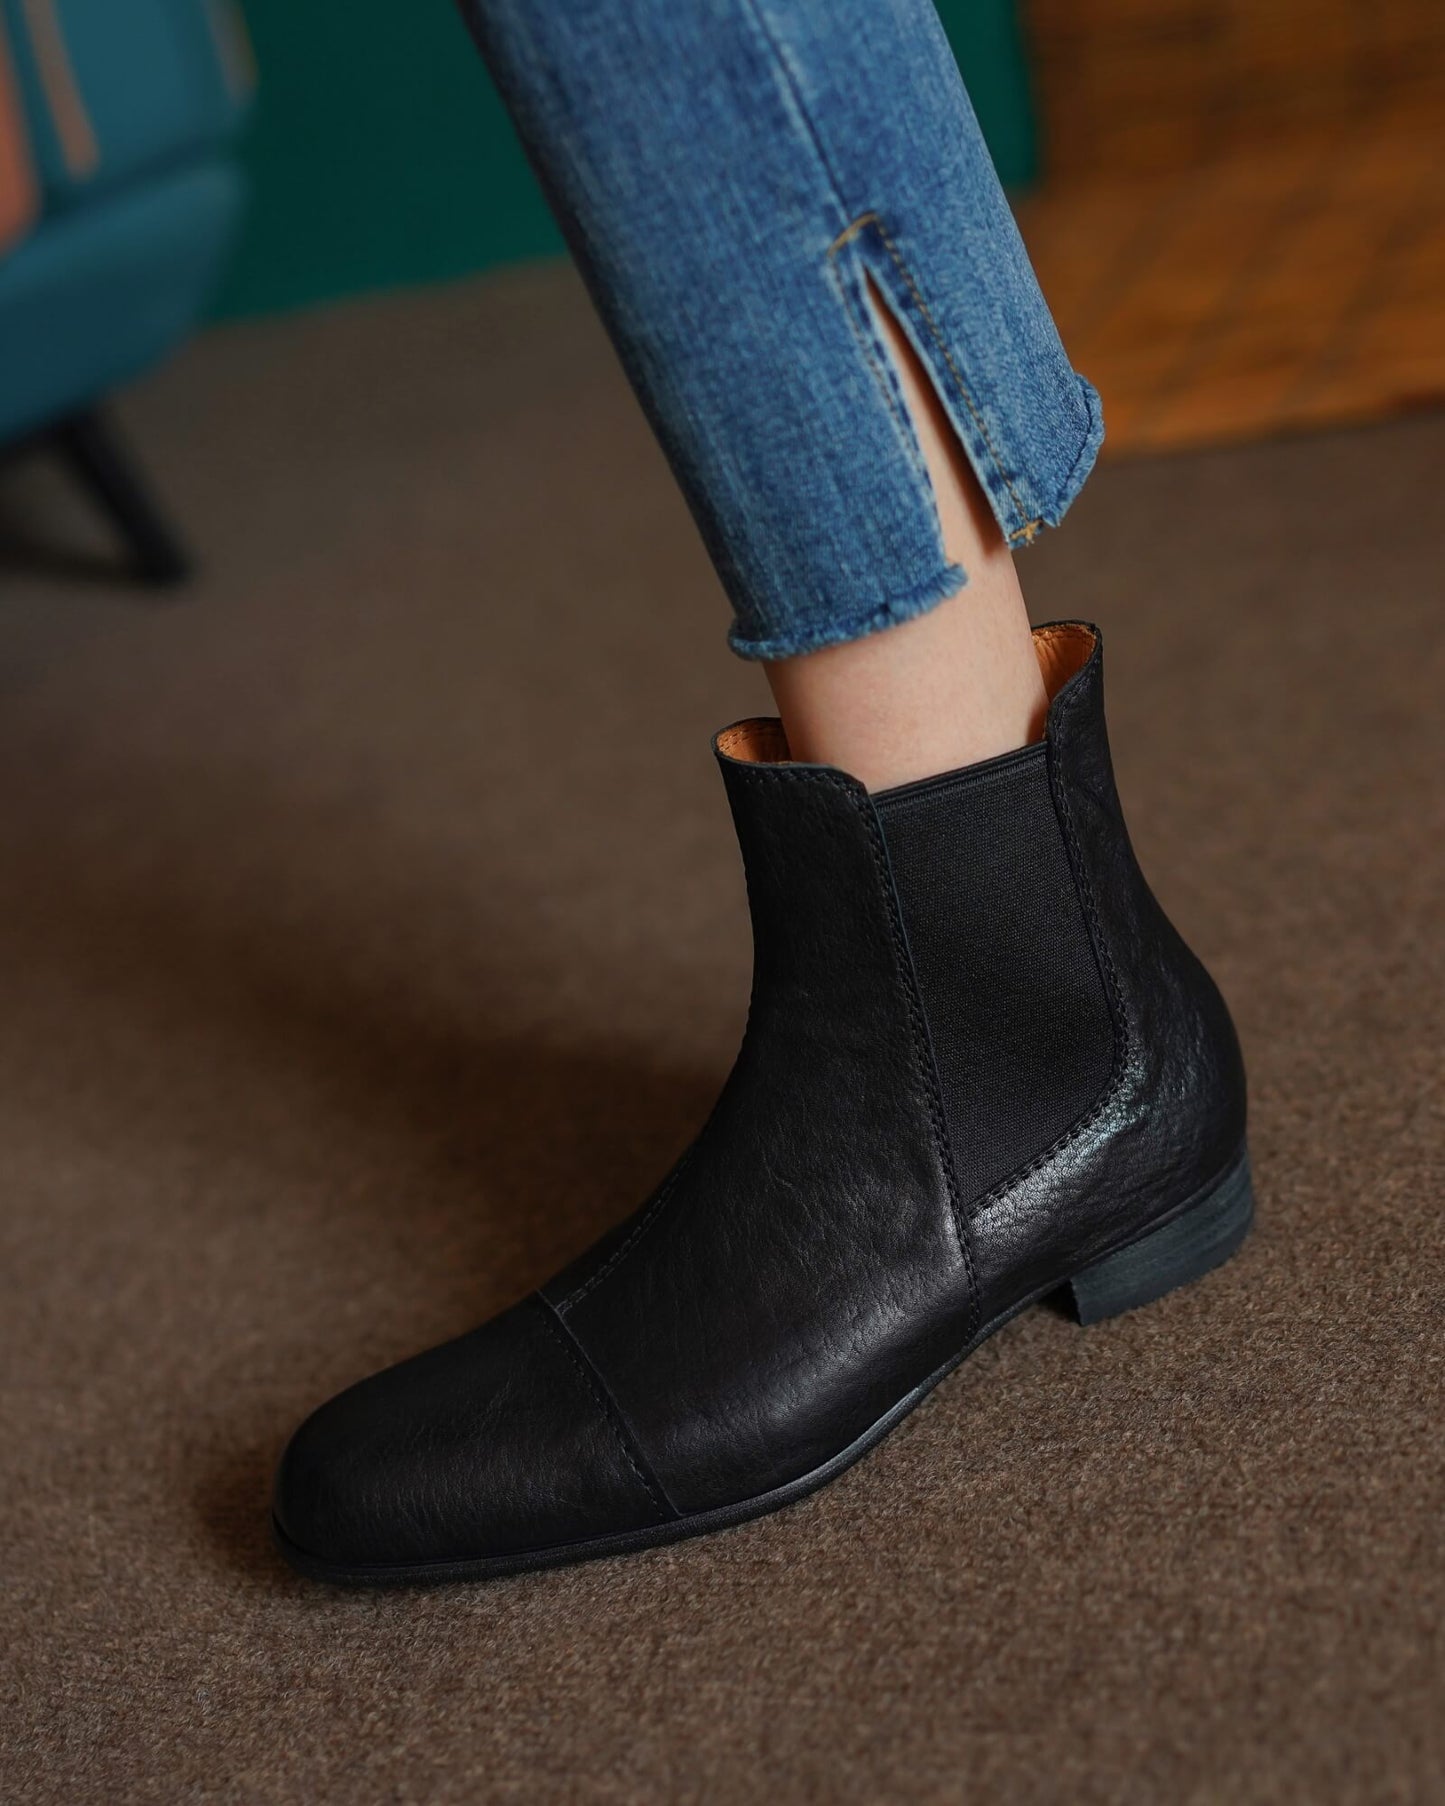 370-cap-toe-black-leather-boots-model